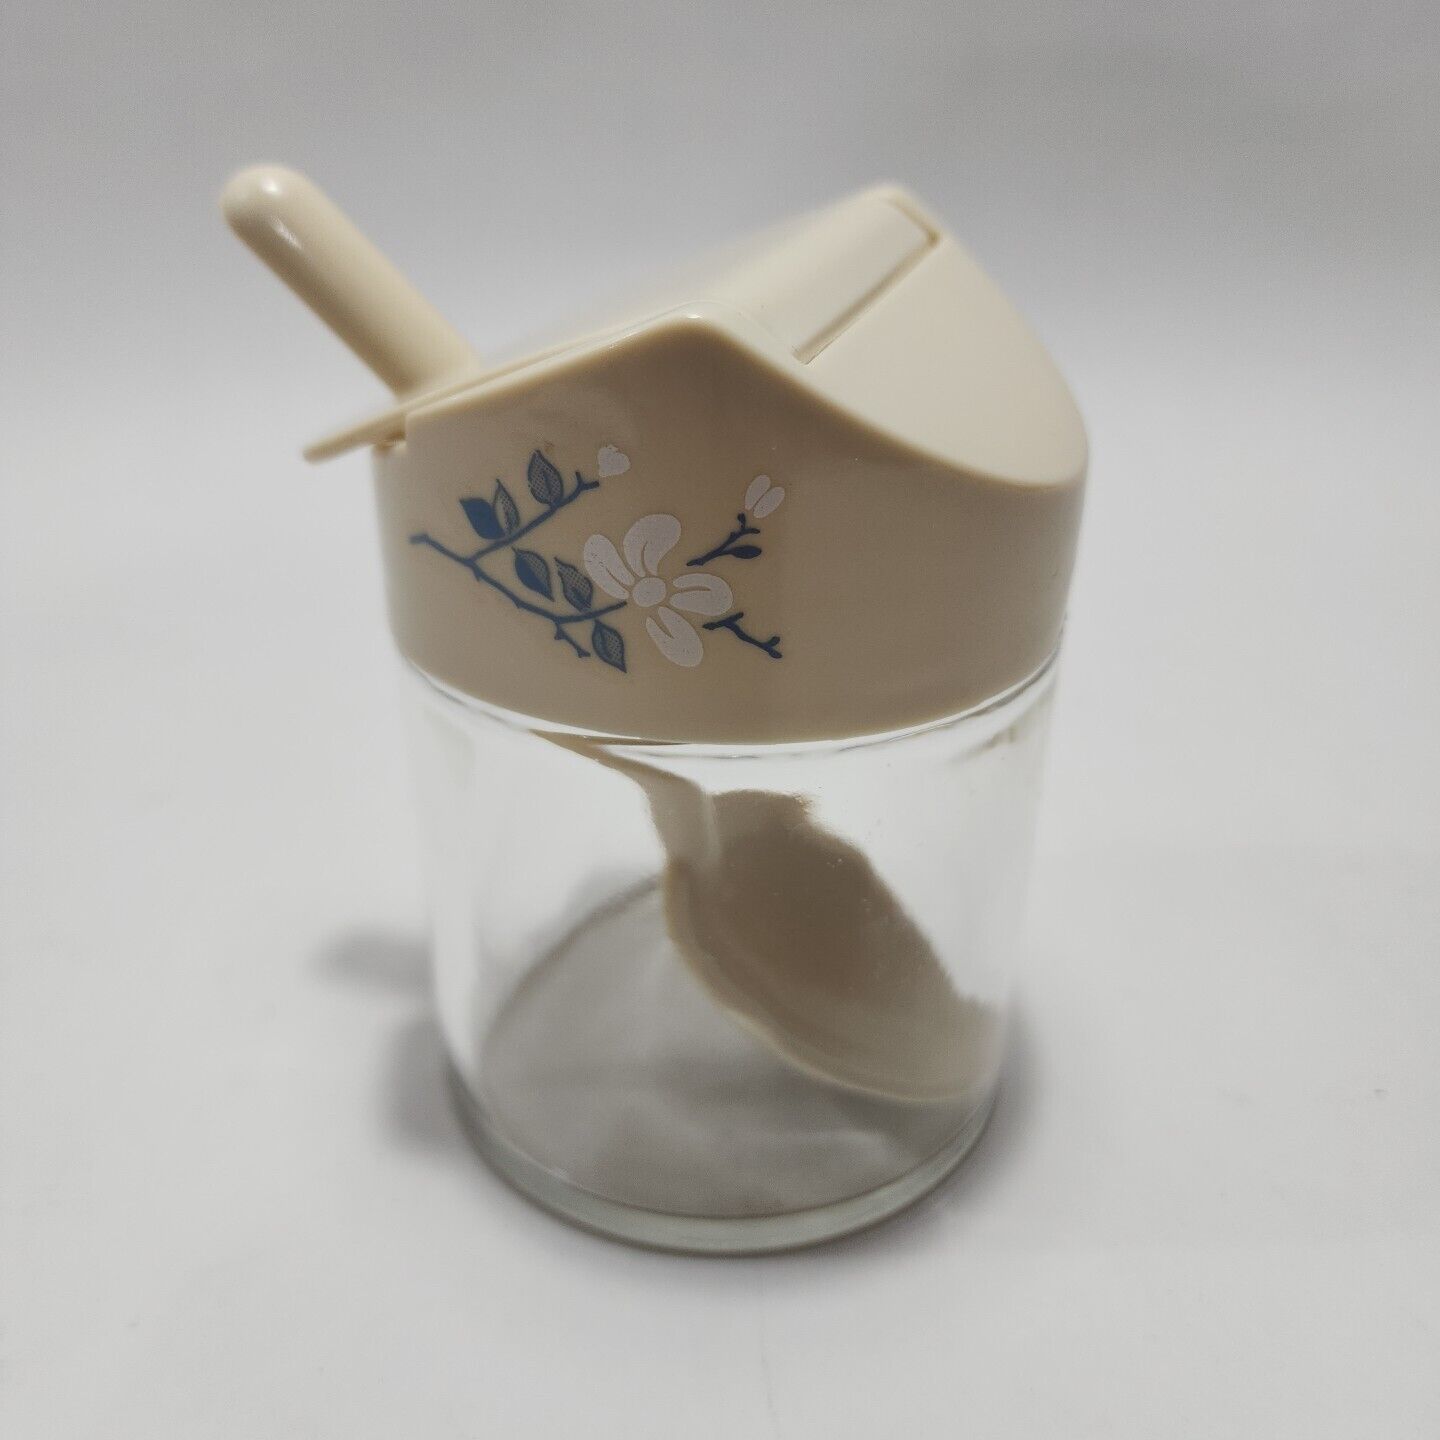 Vintage Corelle Coordinates Gemco Floral Pattern Sugar Bowl Jar With Spoon